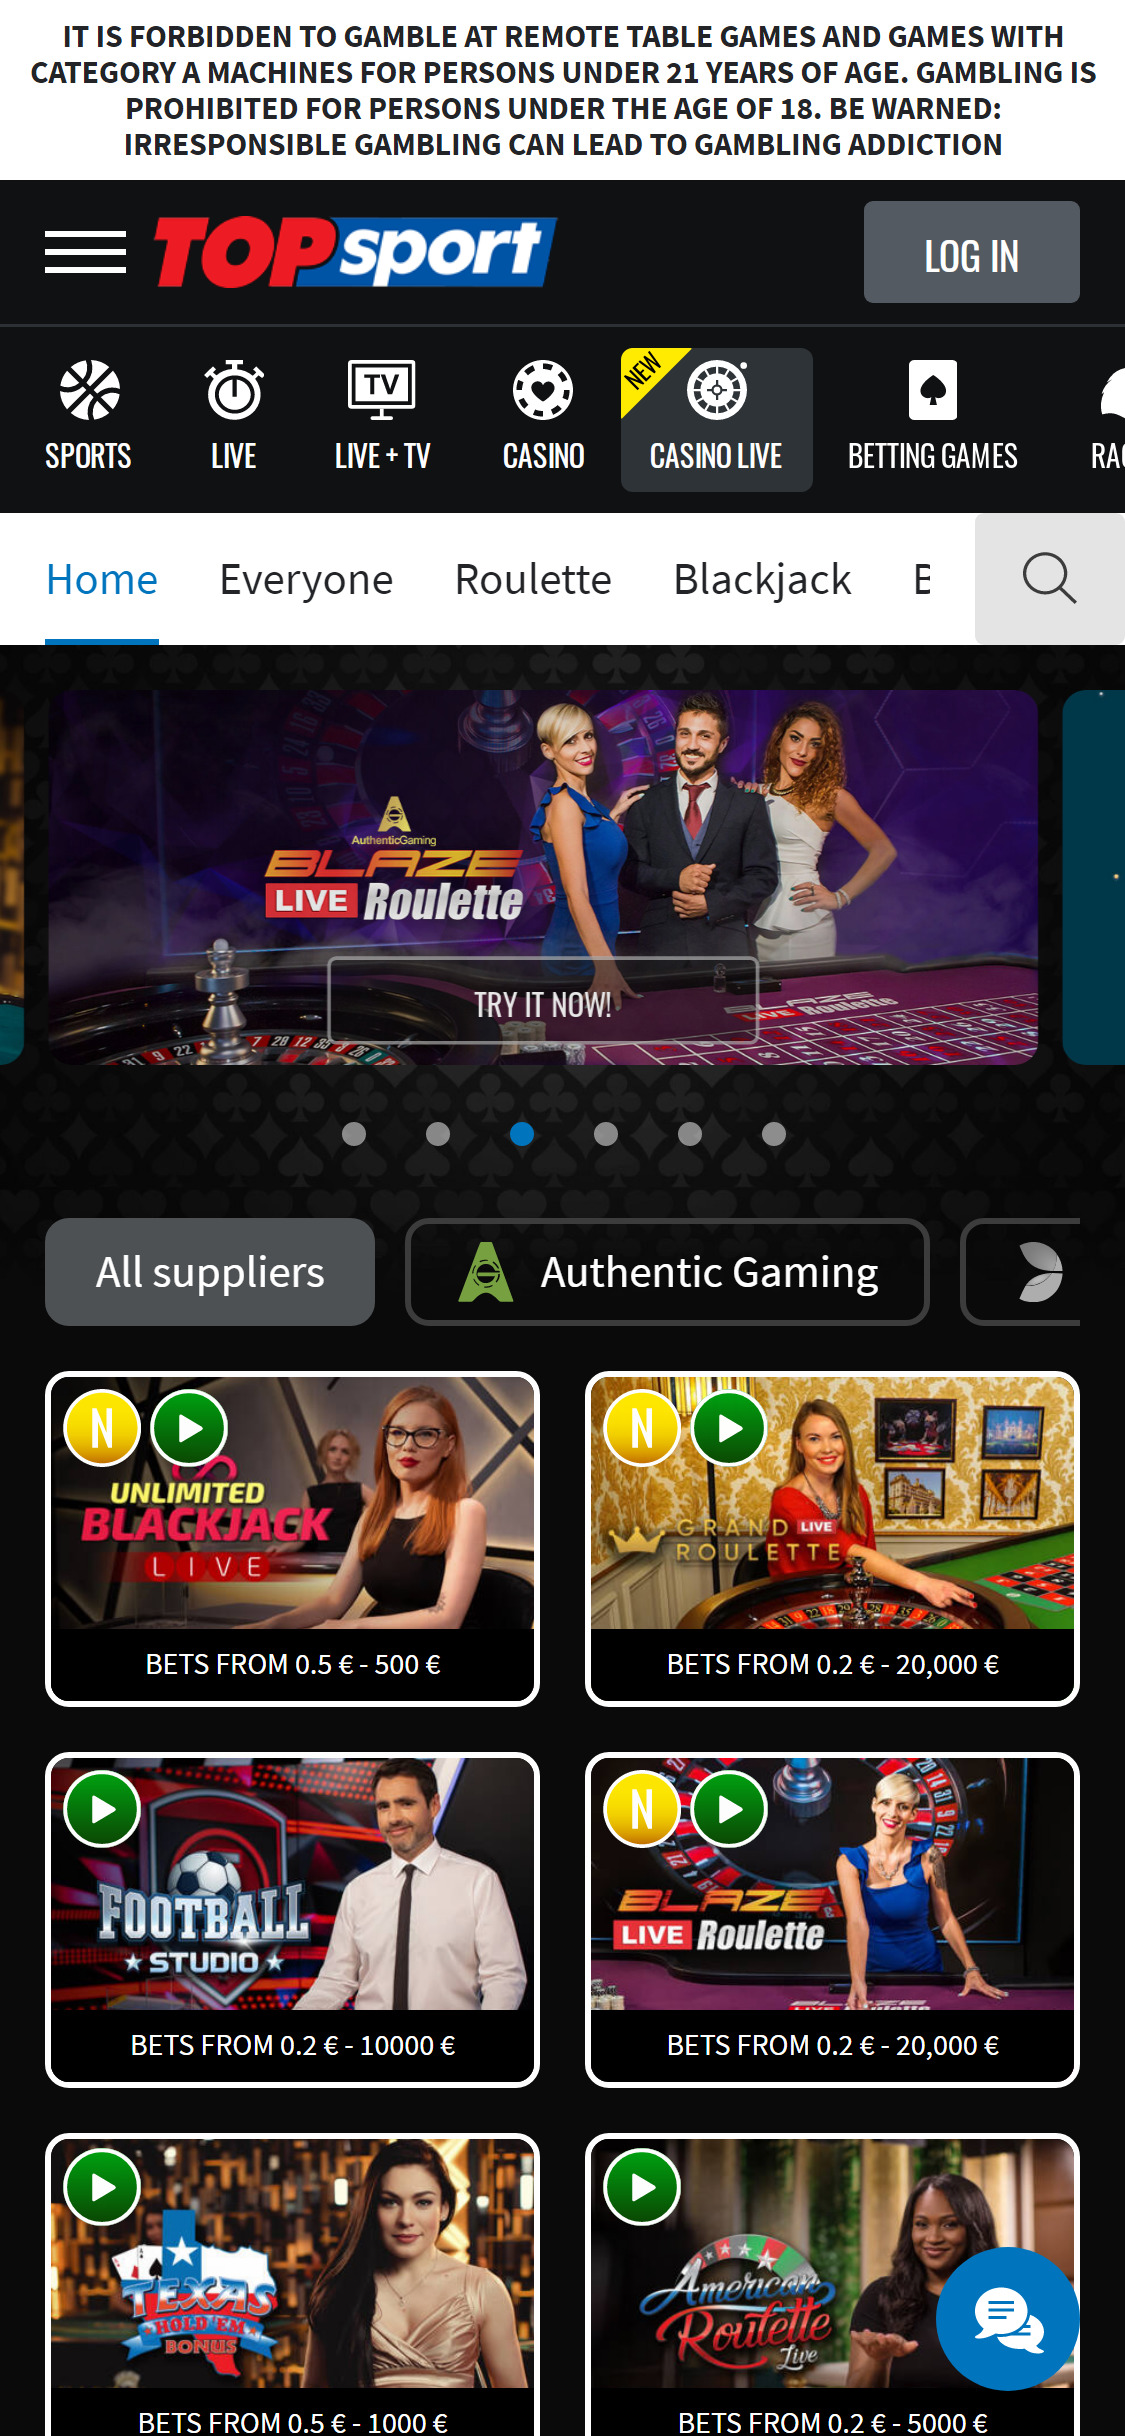 Top Sport Casino Latvia Mobile Live Dealer Games Review